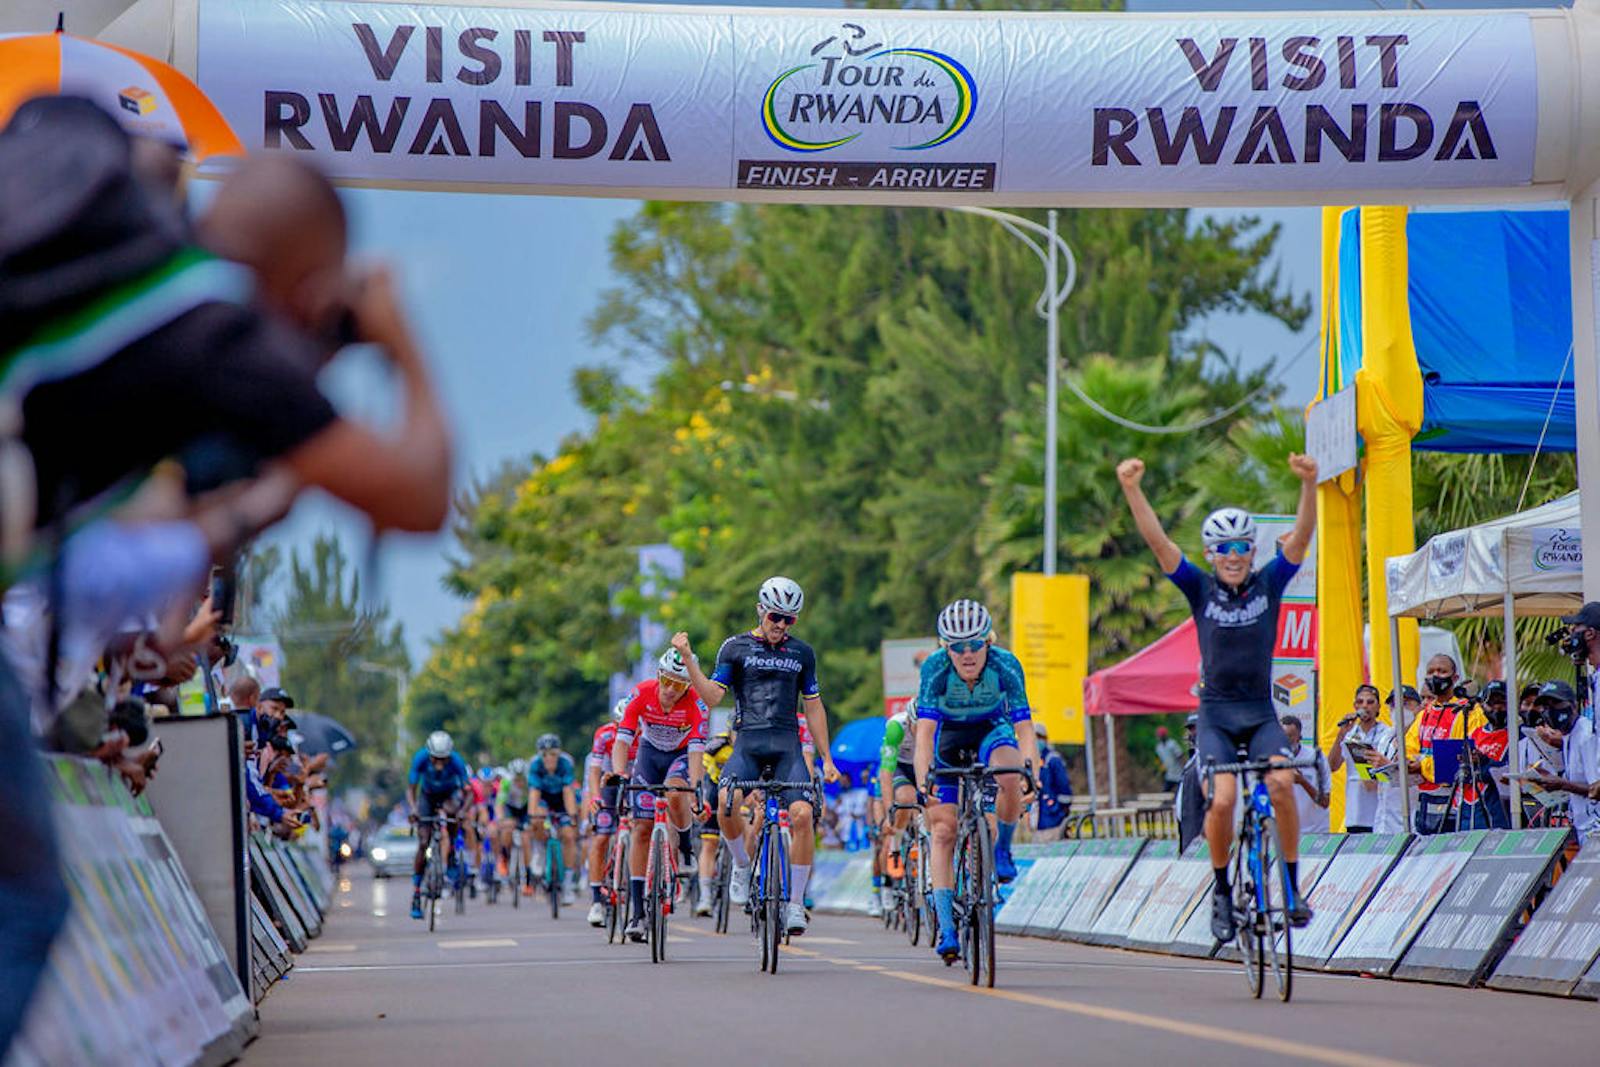 The start of Tour du Rwanda